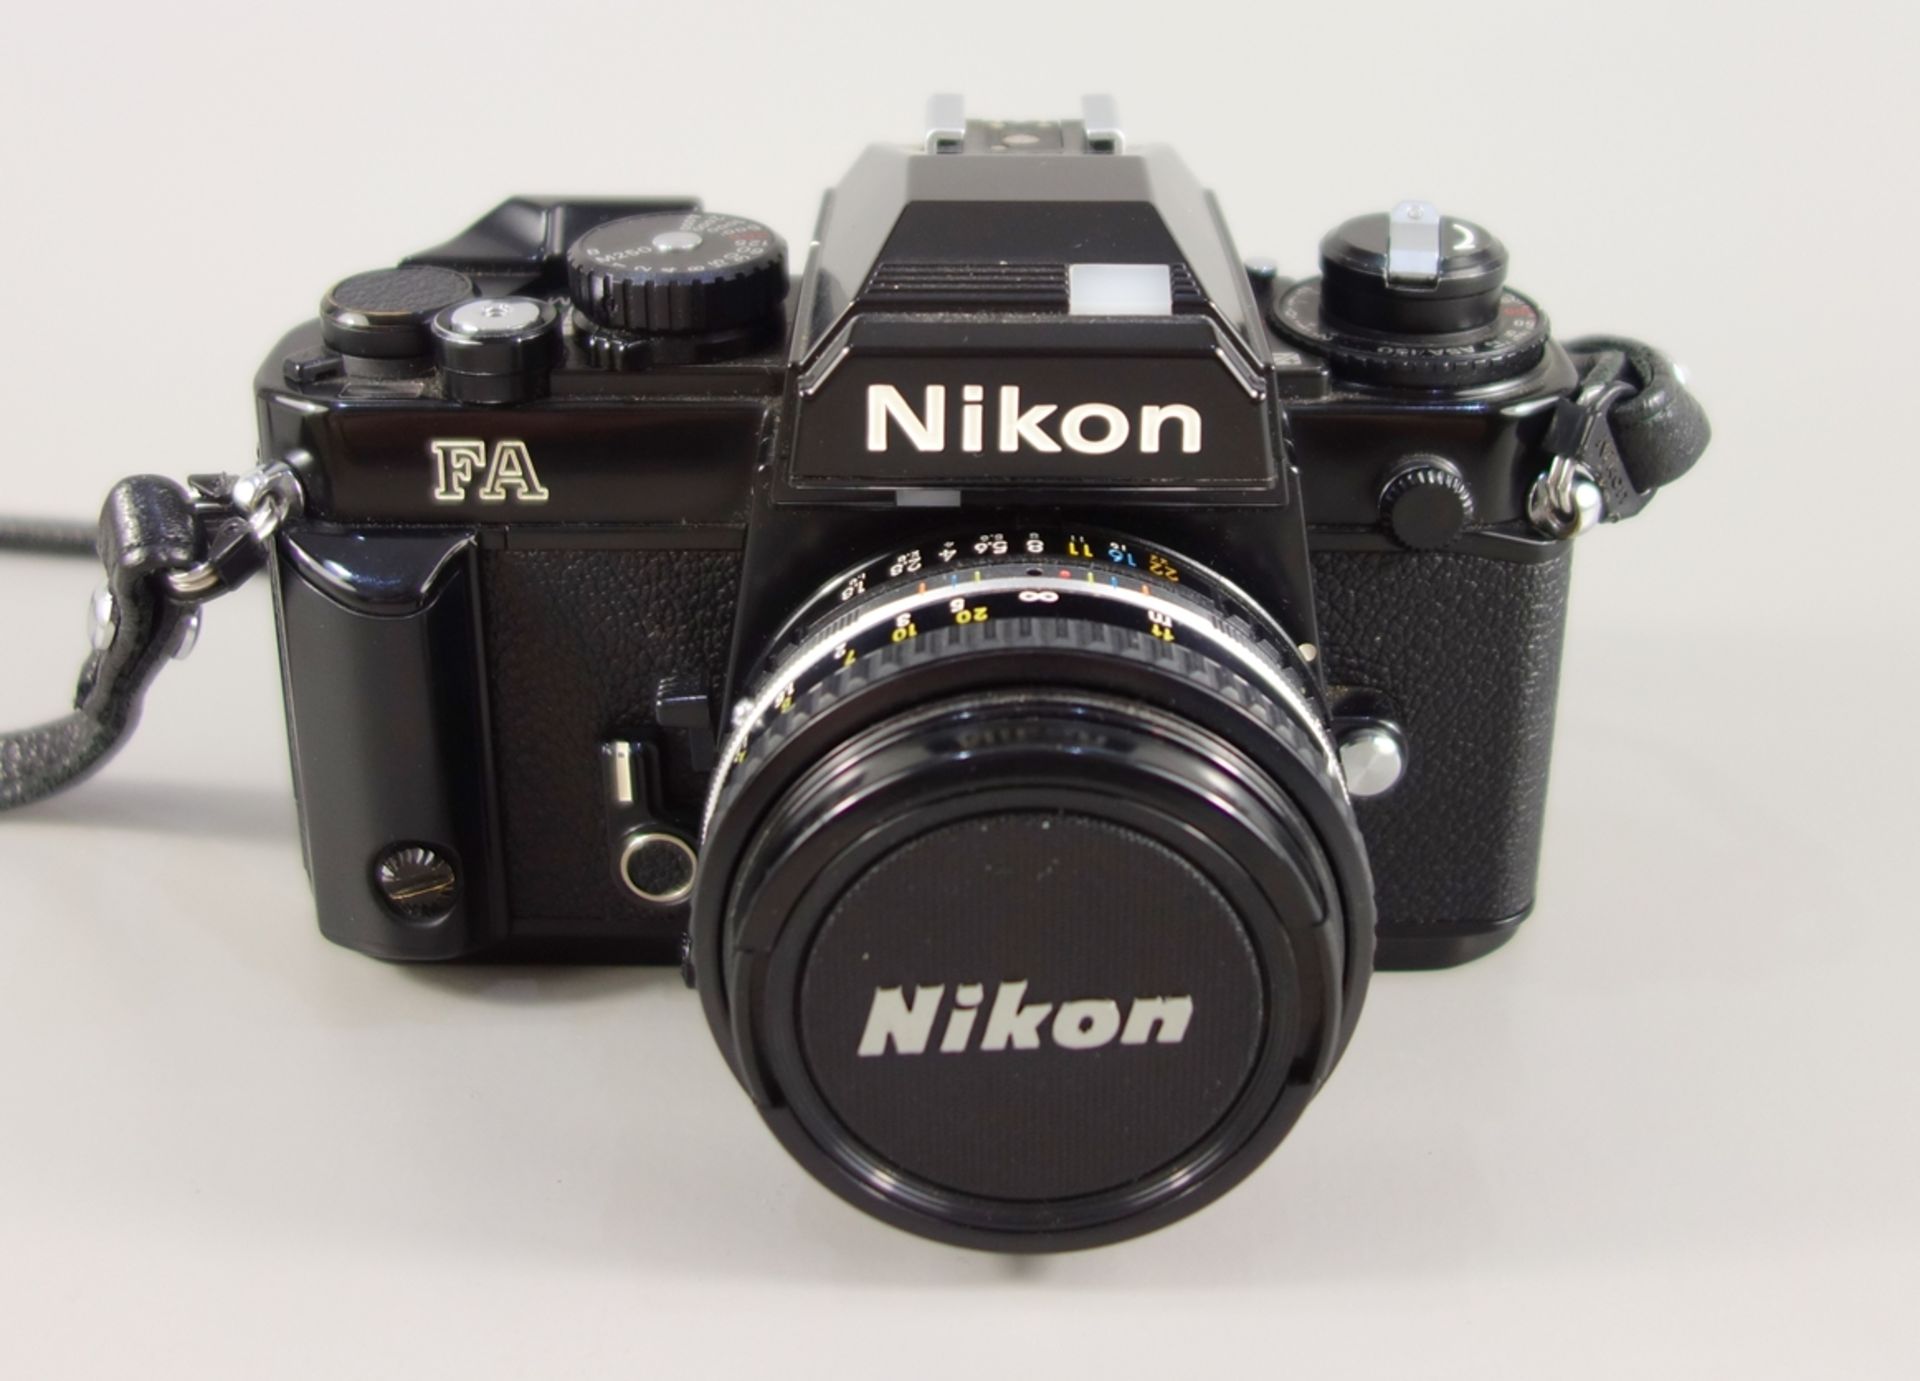 Nikon FA, Spiegelreflexkamera, schwarz, Serien-Nr. 5162031, mit Objektiv Nikon